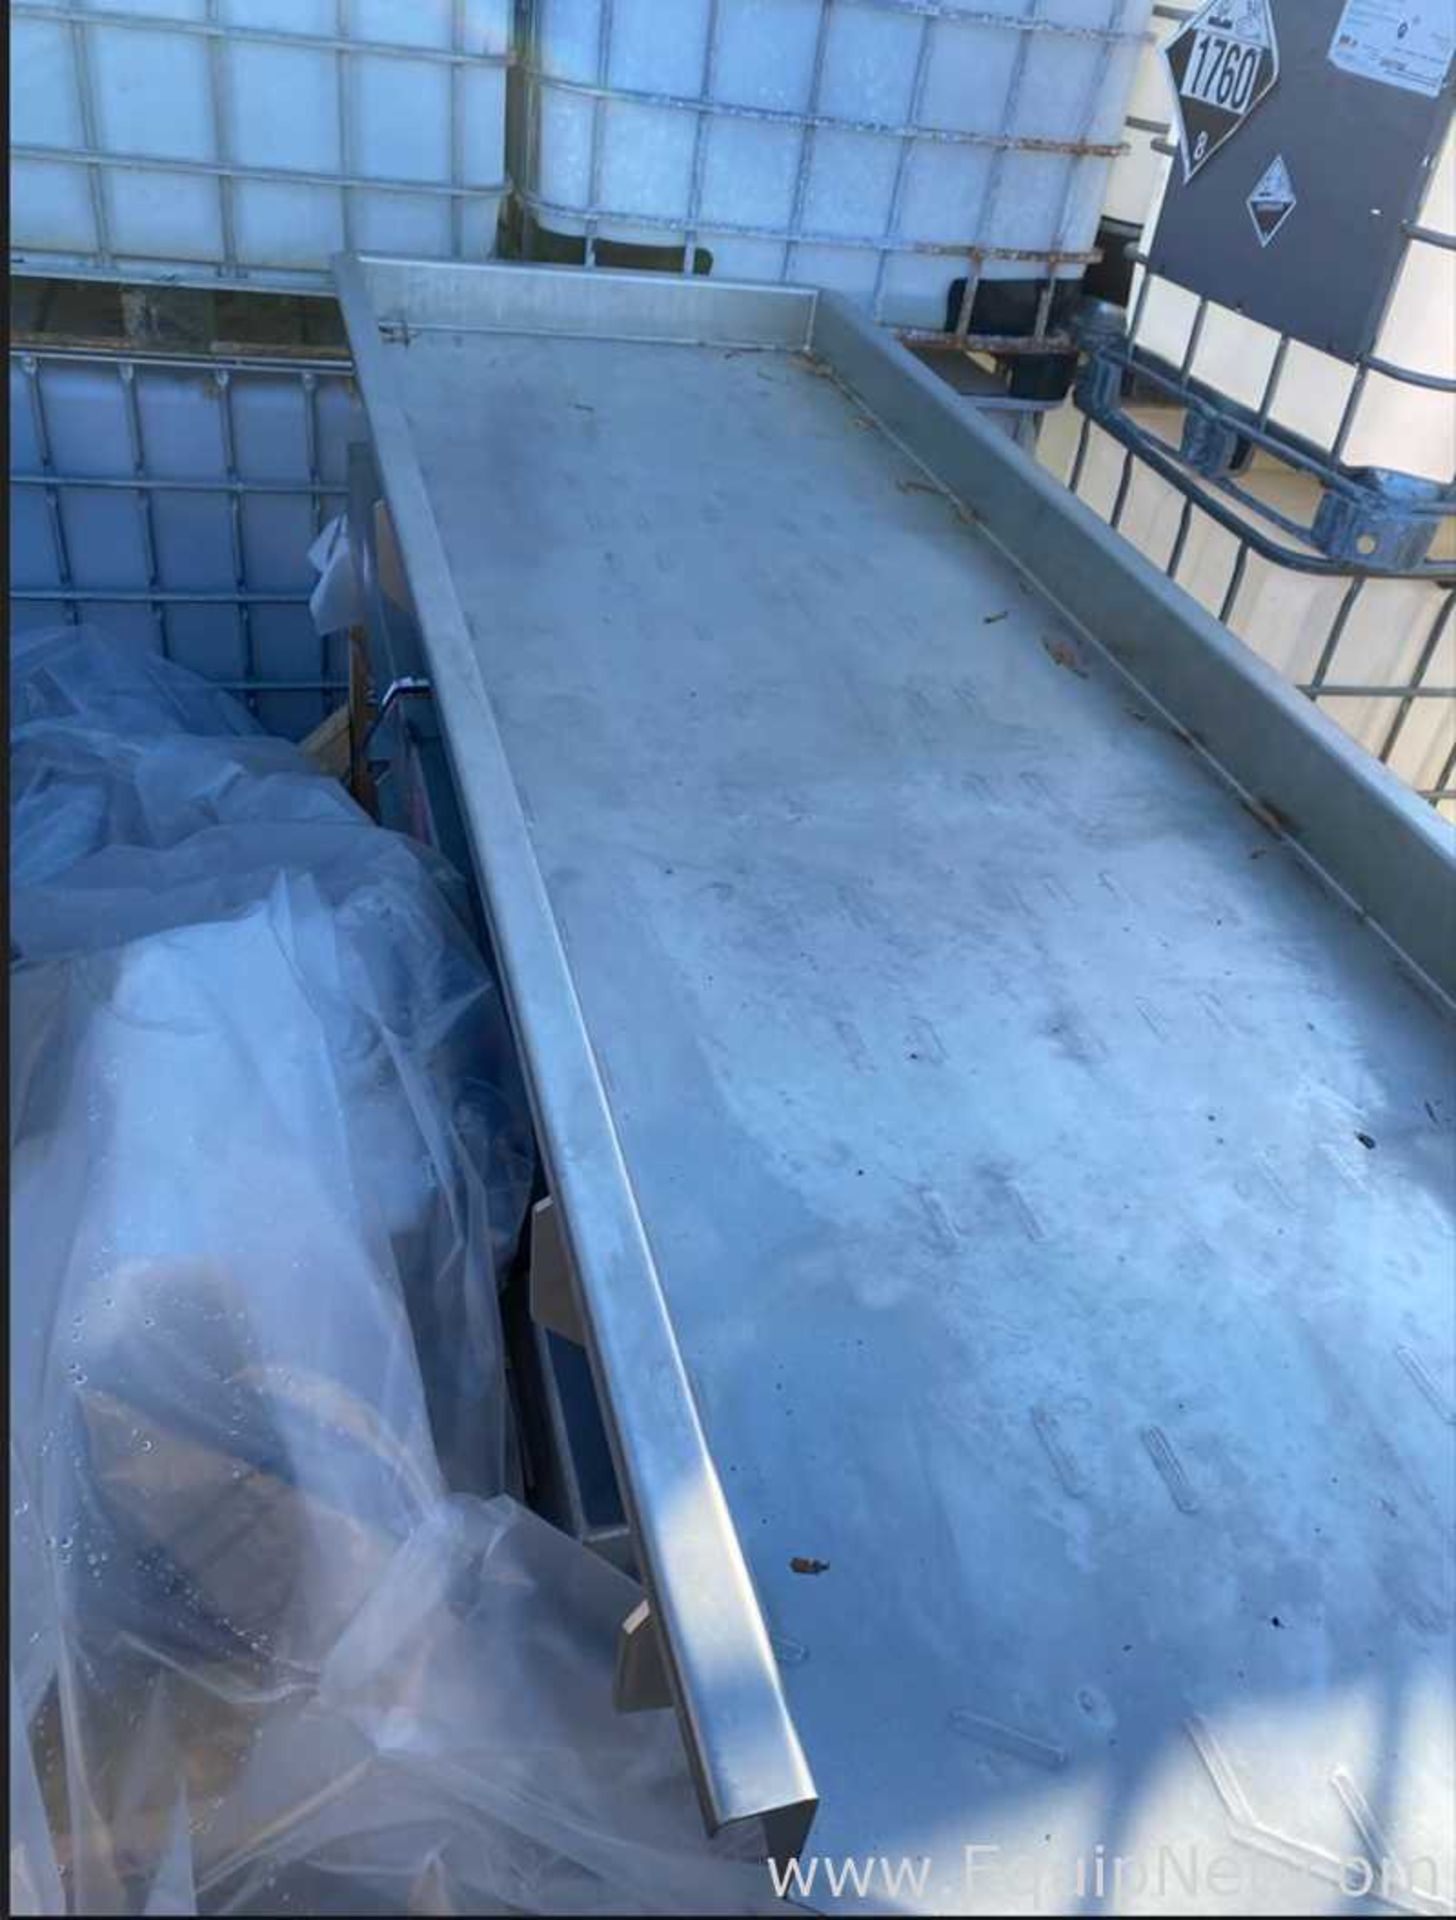 Unused Smalley Mfg. Co. Stainless Steel Solid Bed Shaker Conveyor - Image 2 of 3